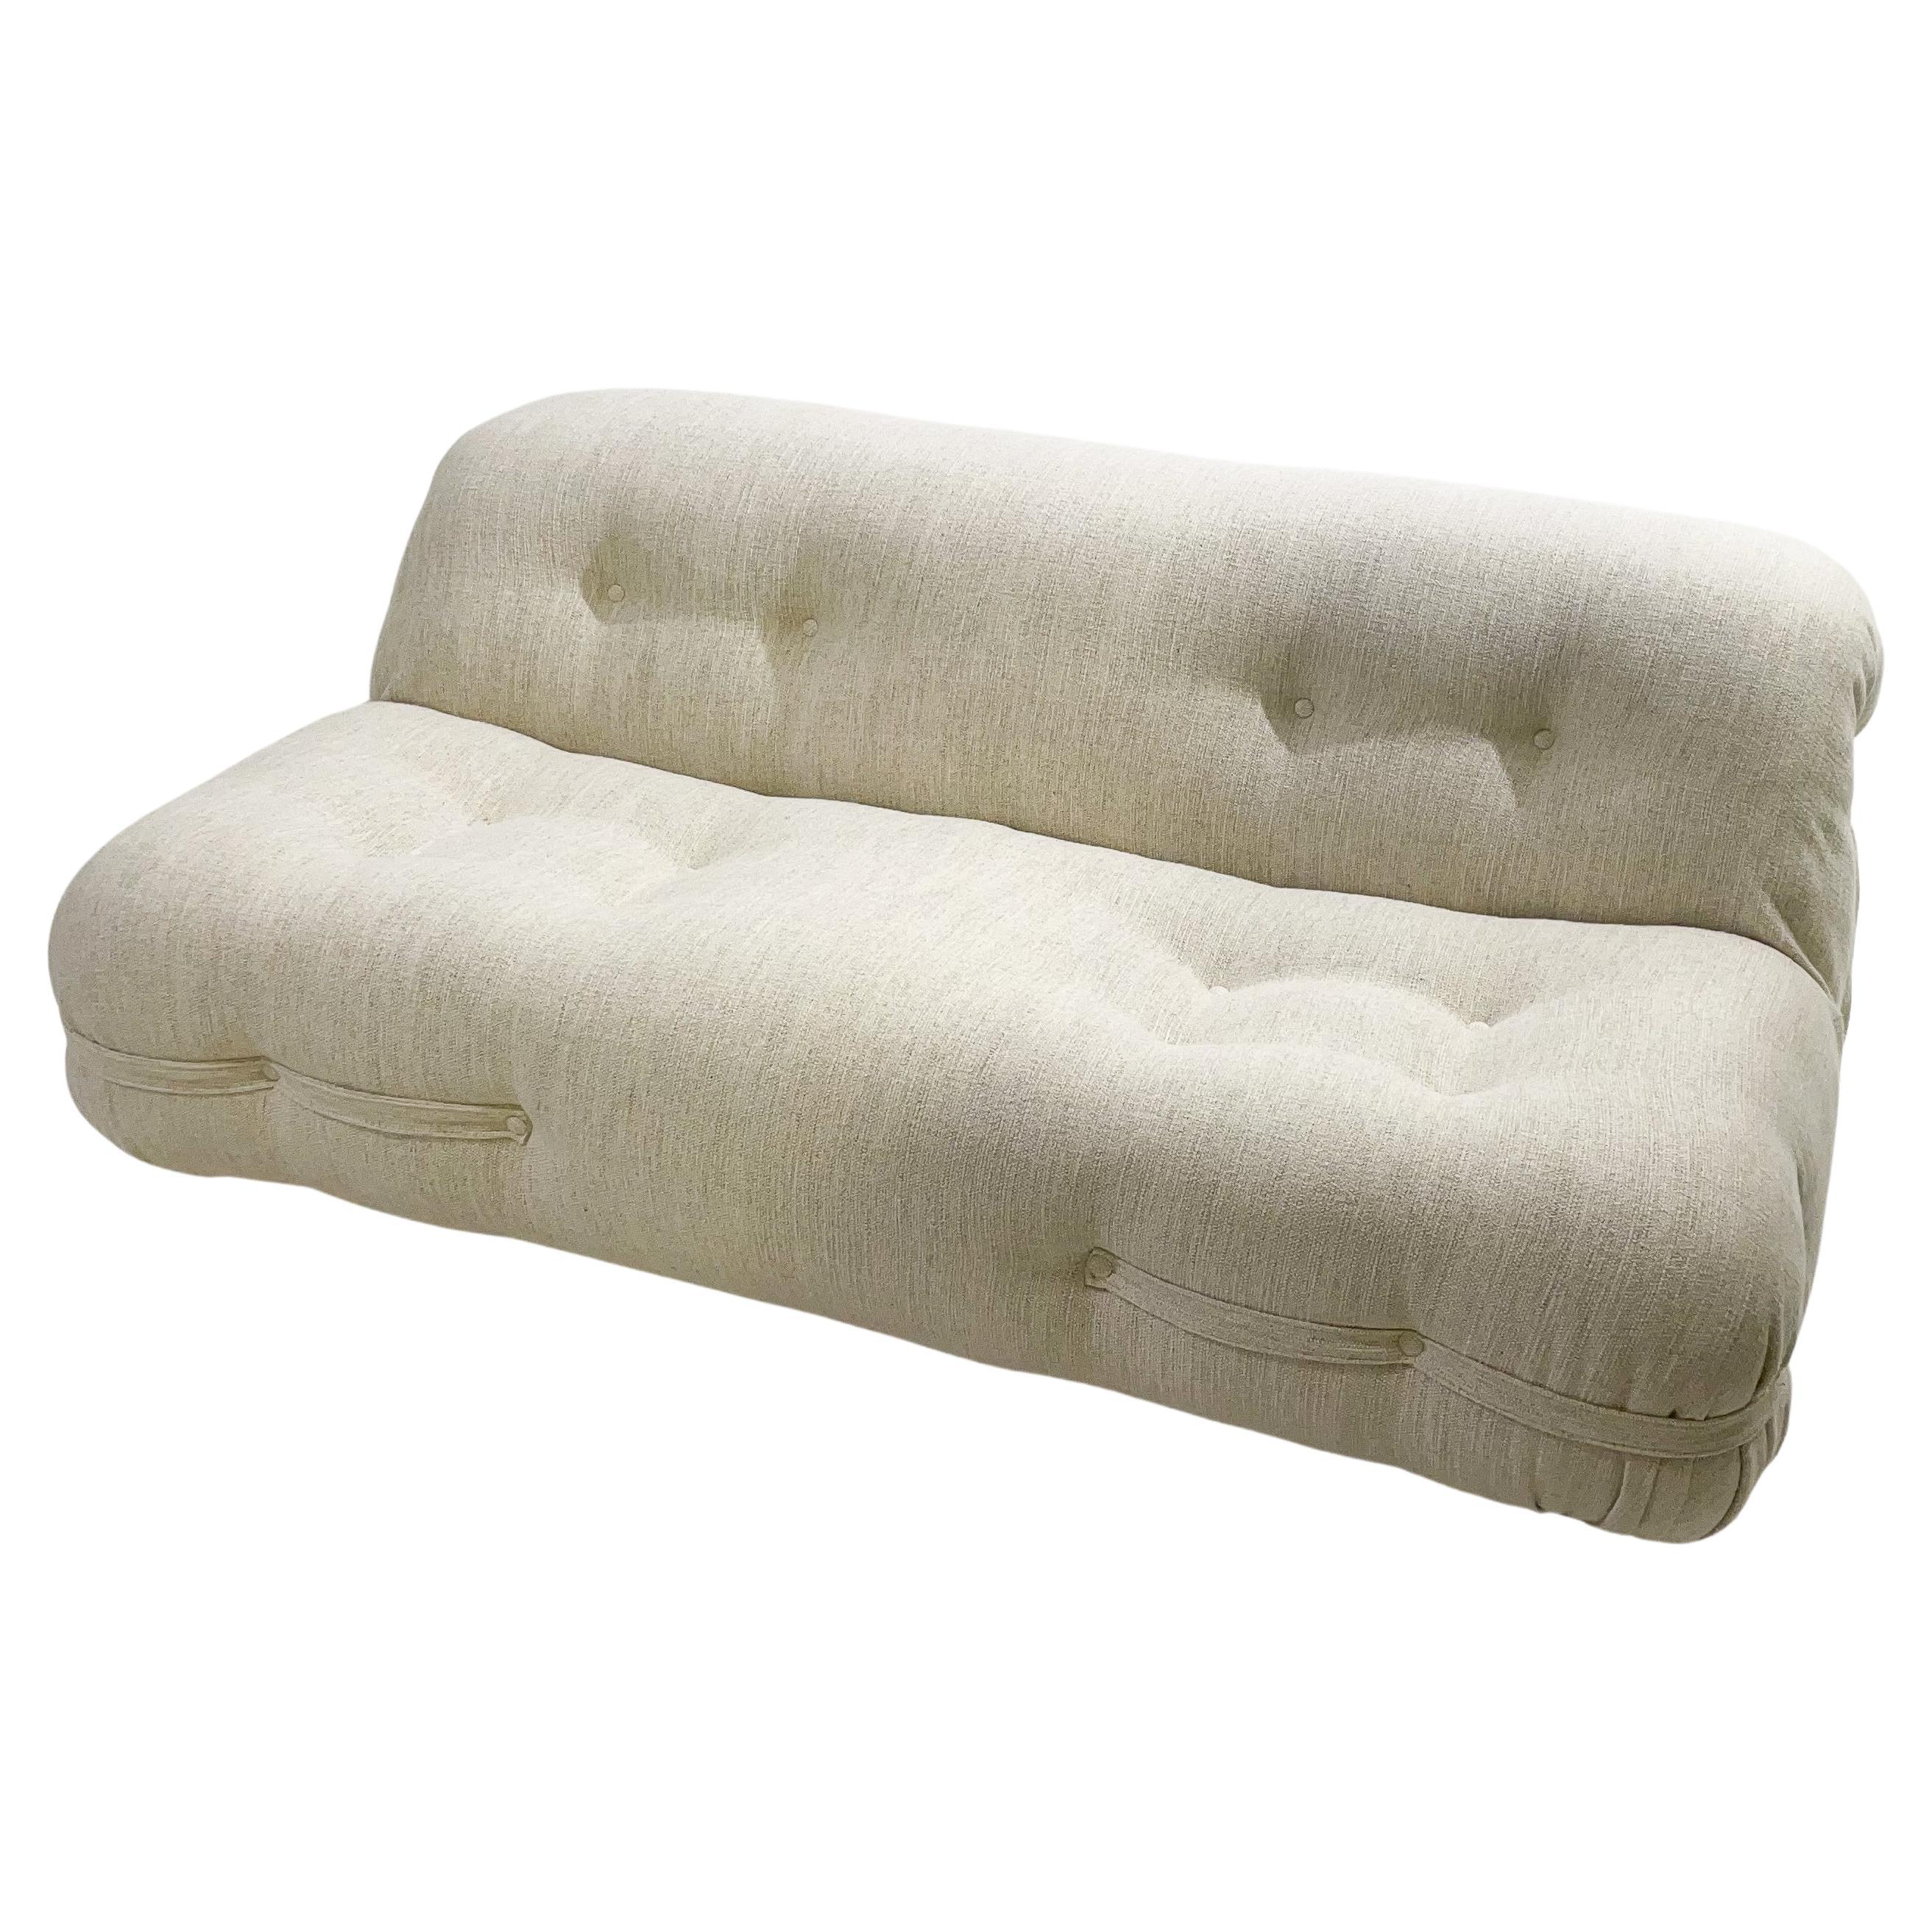 Mid-Century Modern Italian Sofa, Wood and Fabric, 1960s - New Upholstery